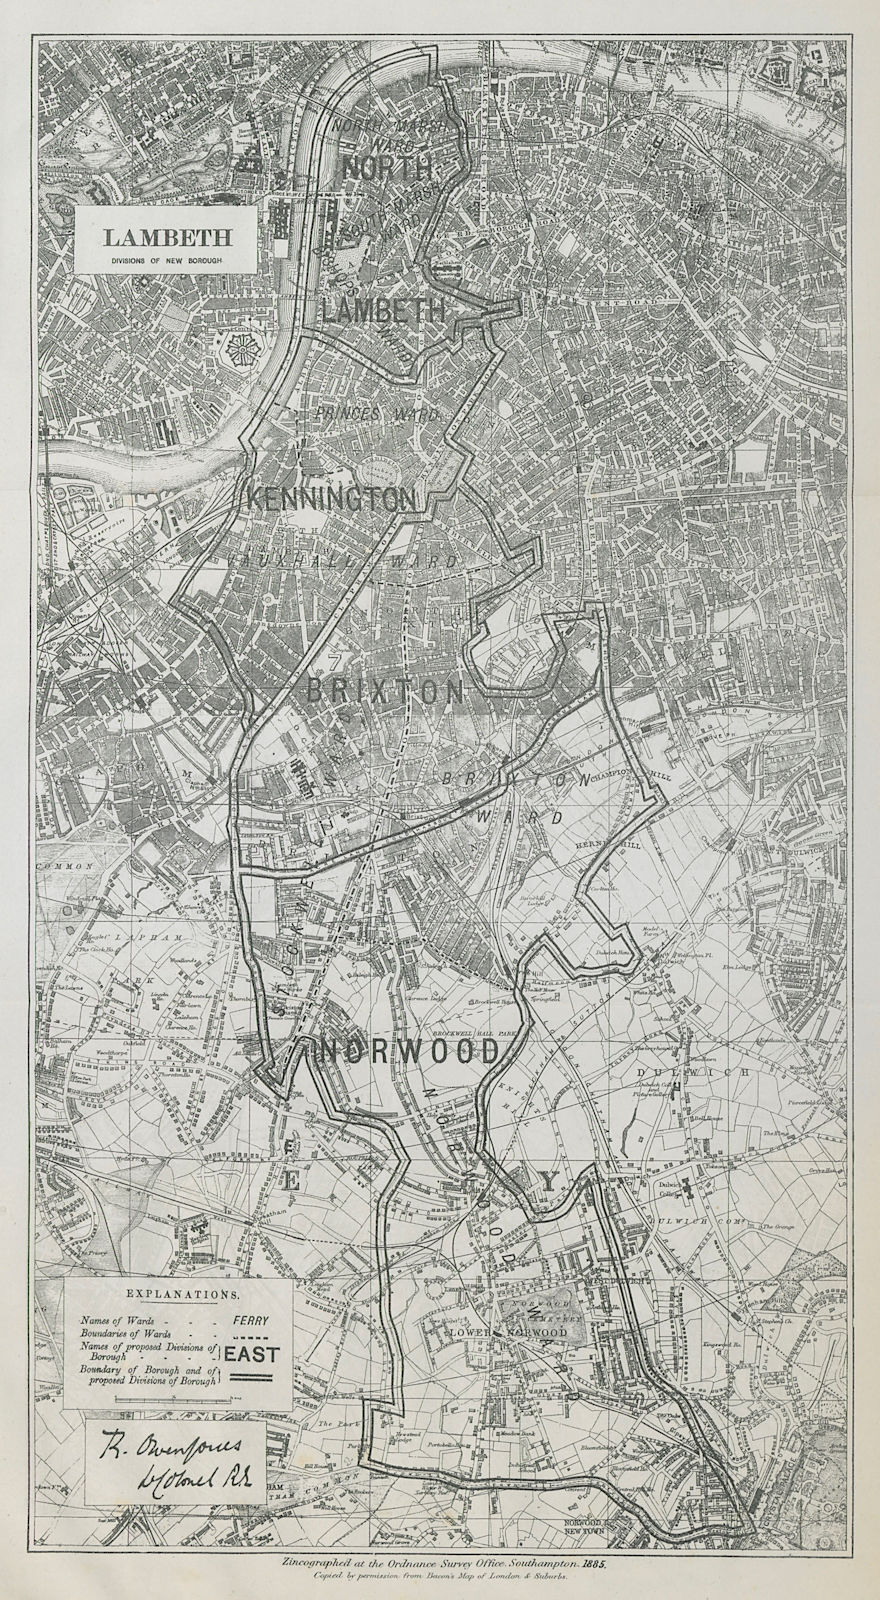 Associate Product Lambeth Parliamentary Borough. Kennington Brixton. BOUNDARY COMMISSION 1885 map